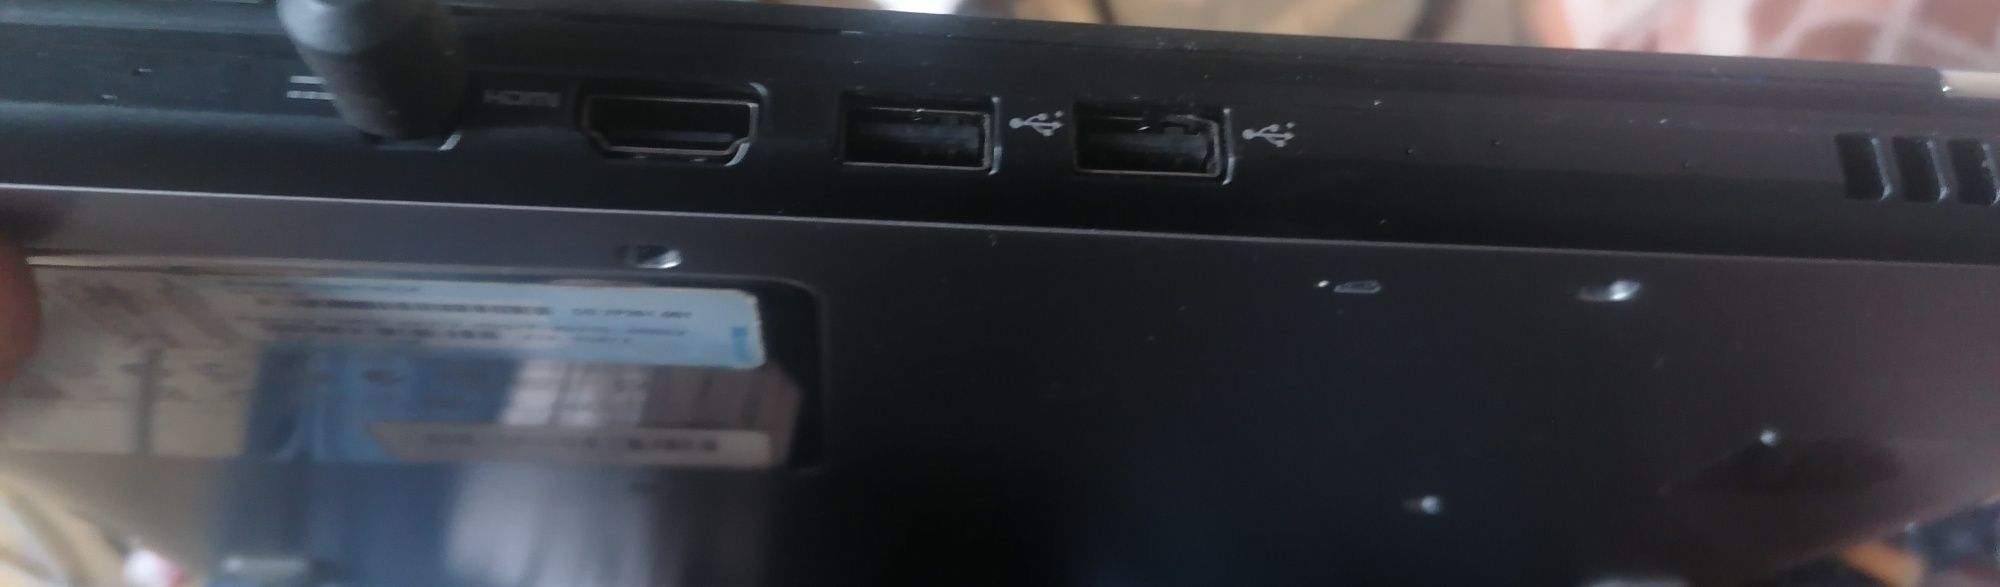 Laptop Acer aspire S3